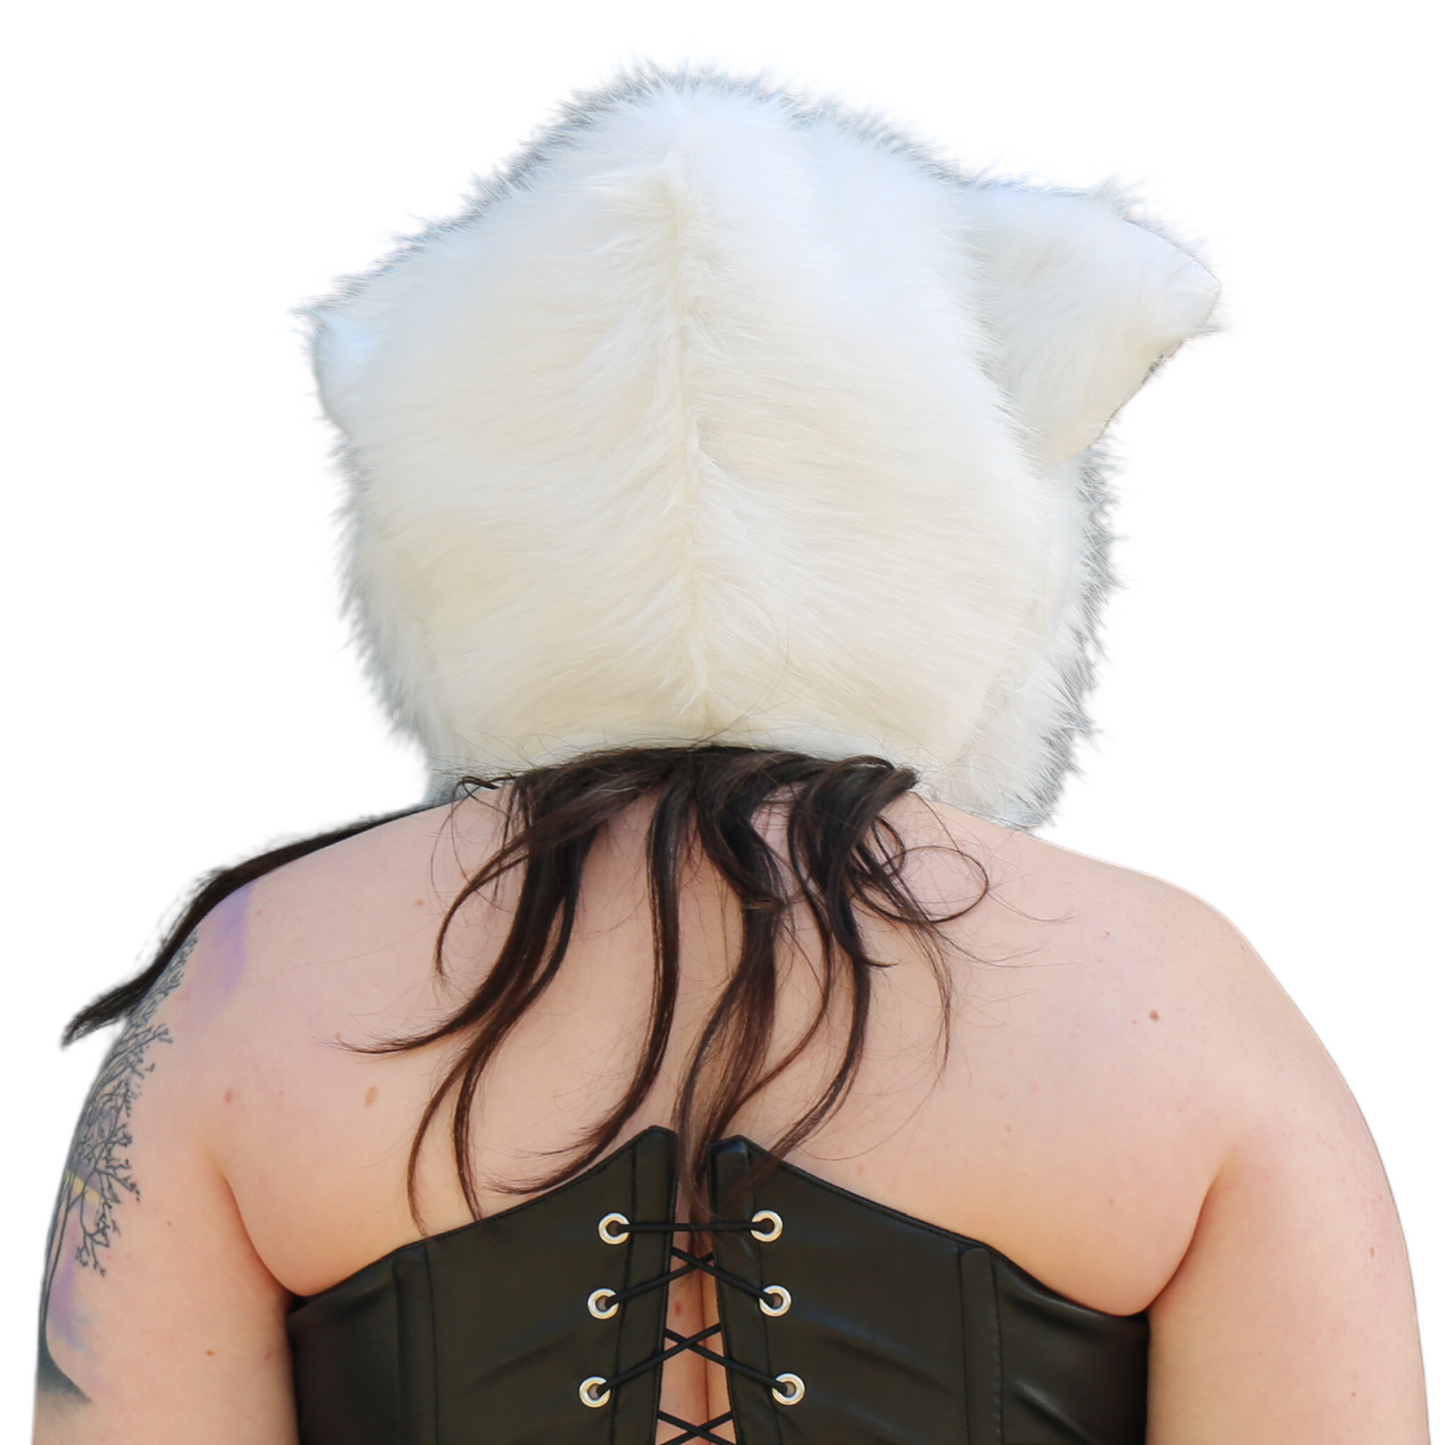 The VM Festival Faux Fur Animal Hood